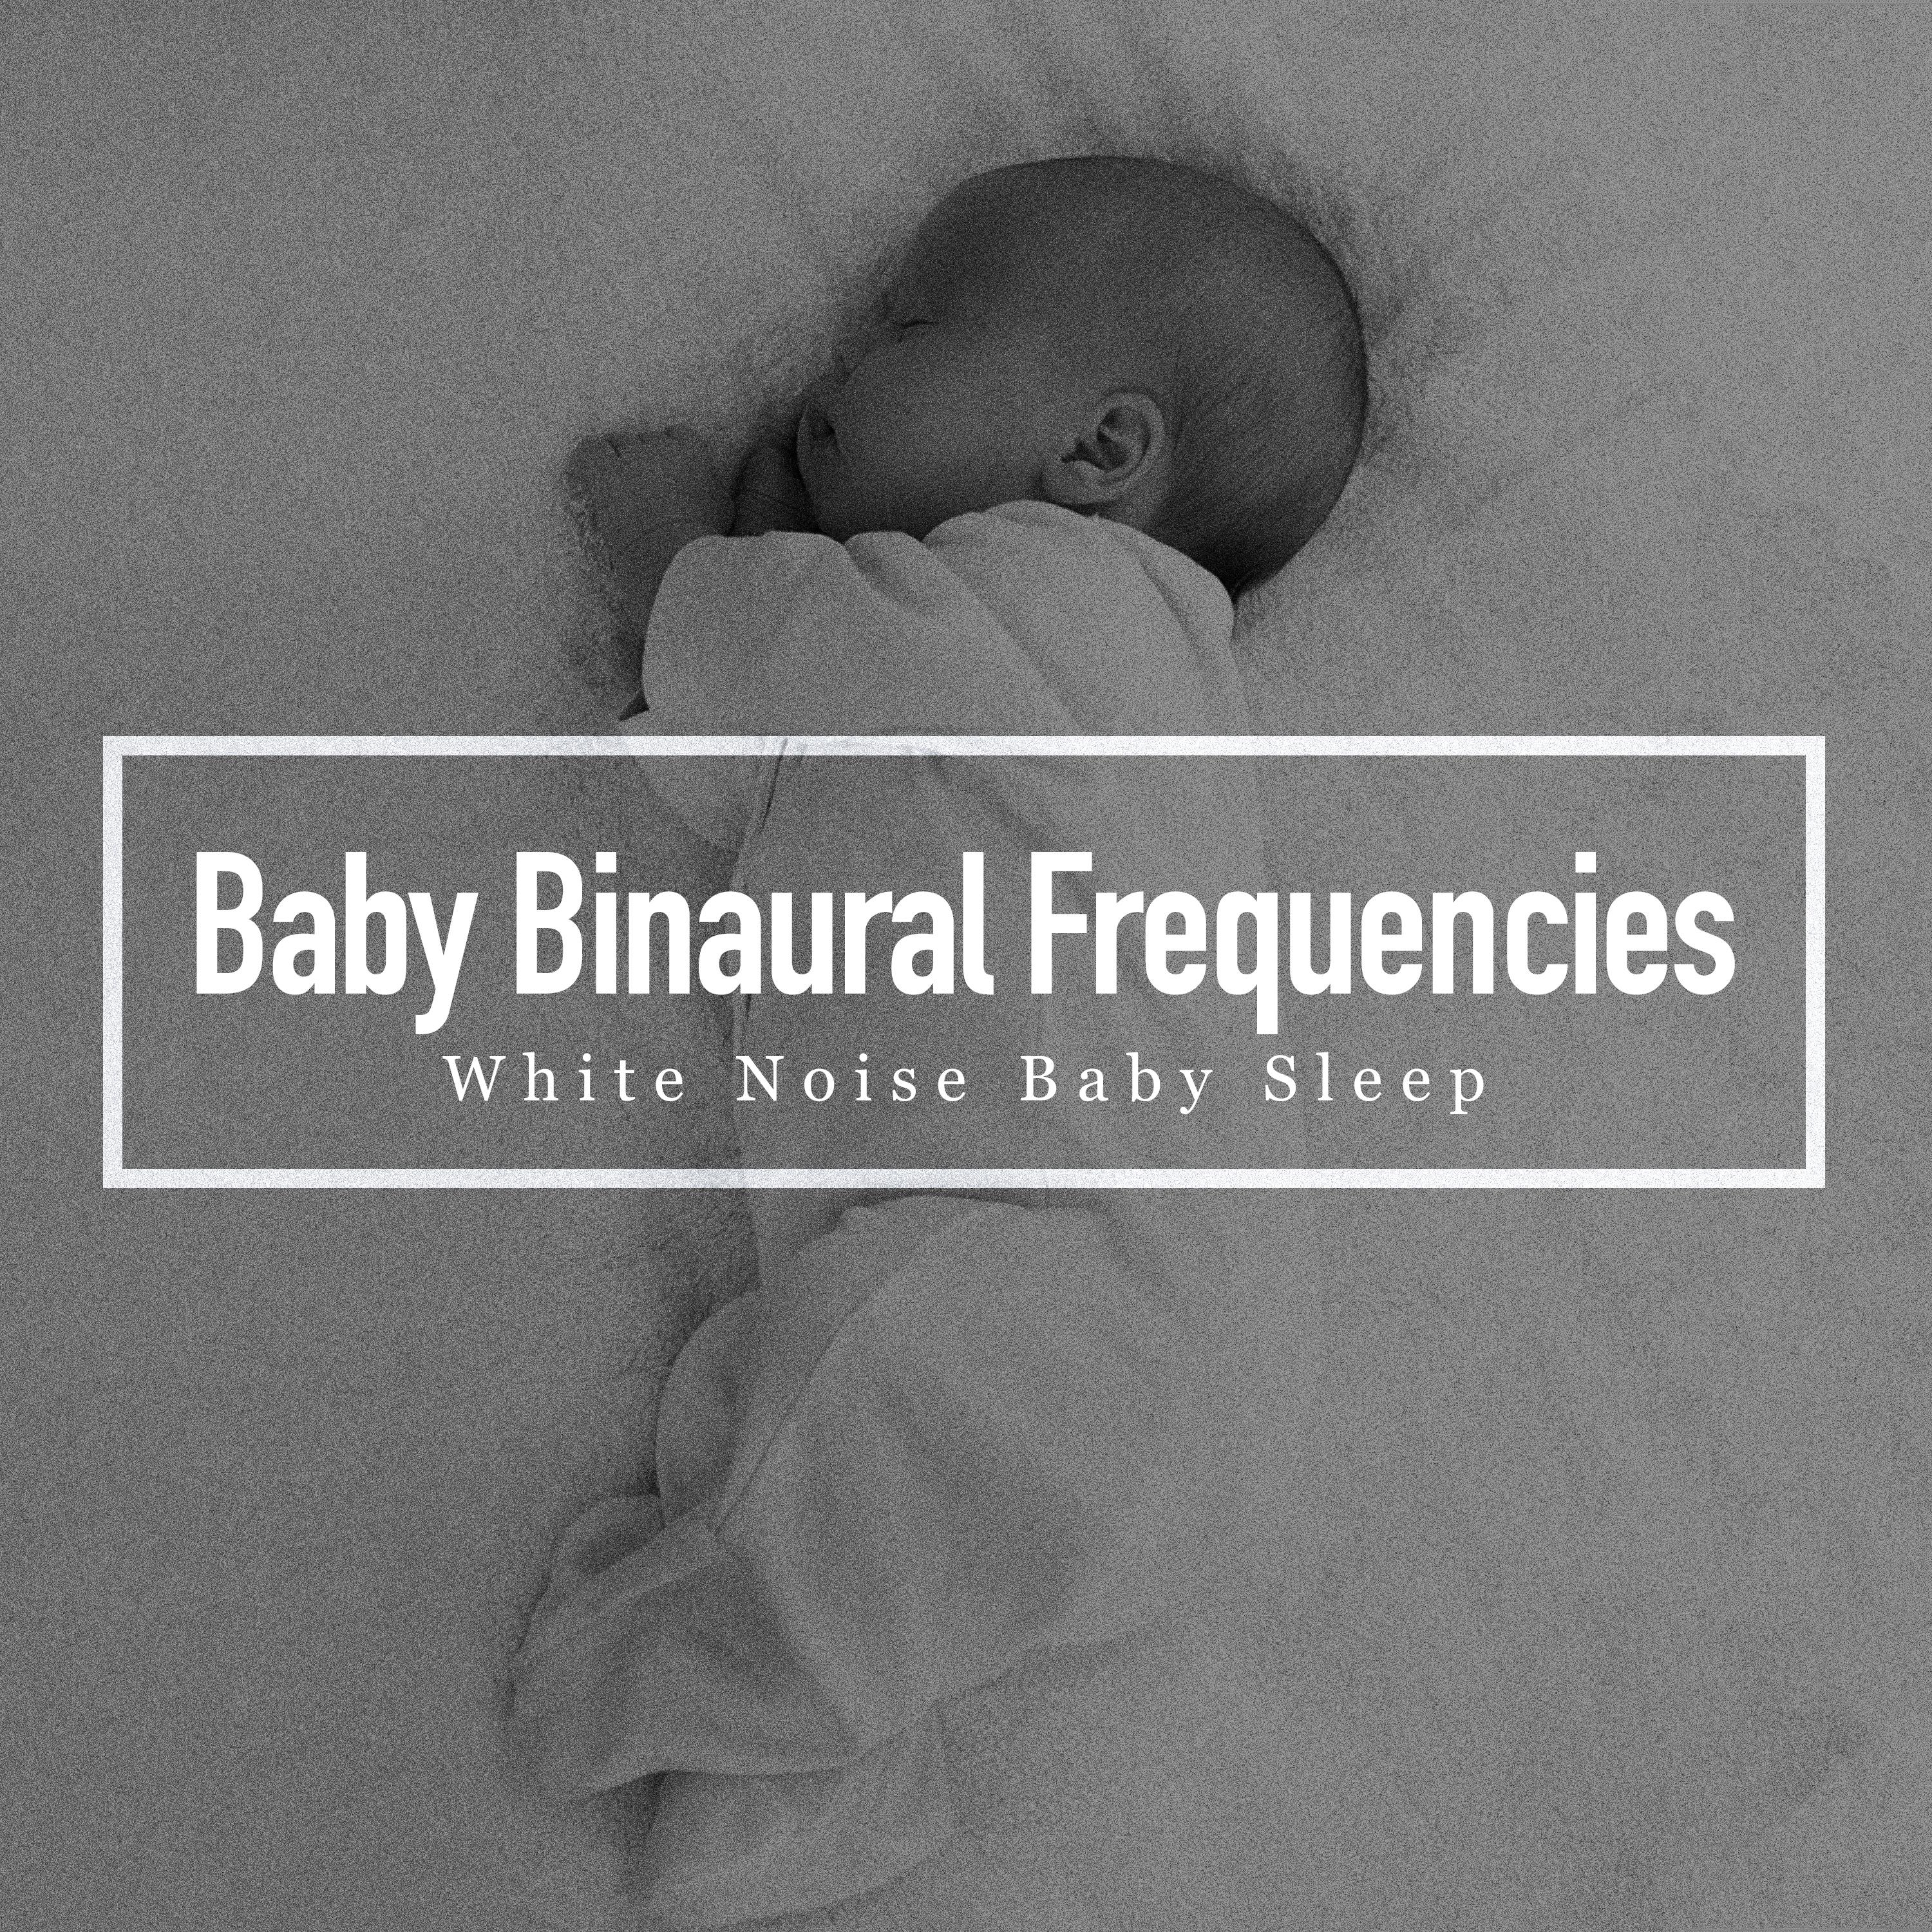 Baby Binaural Frequencies